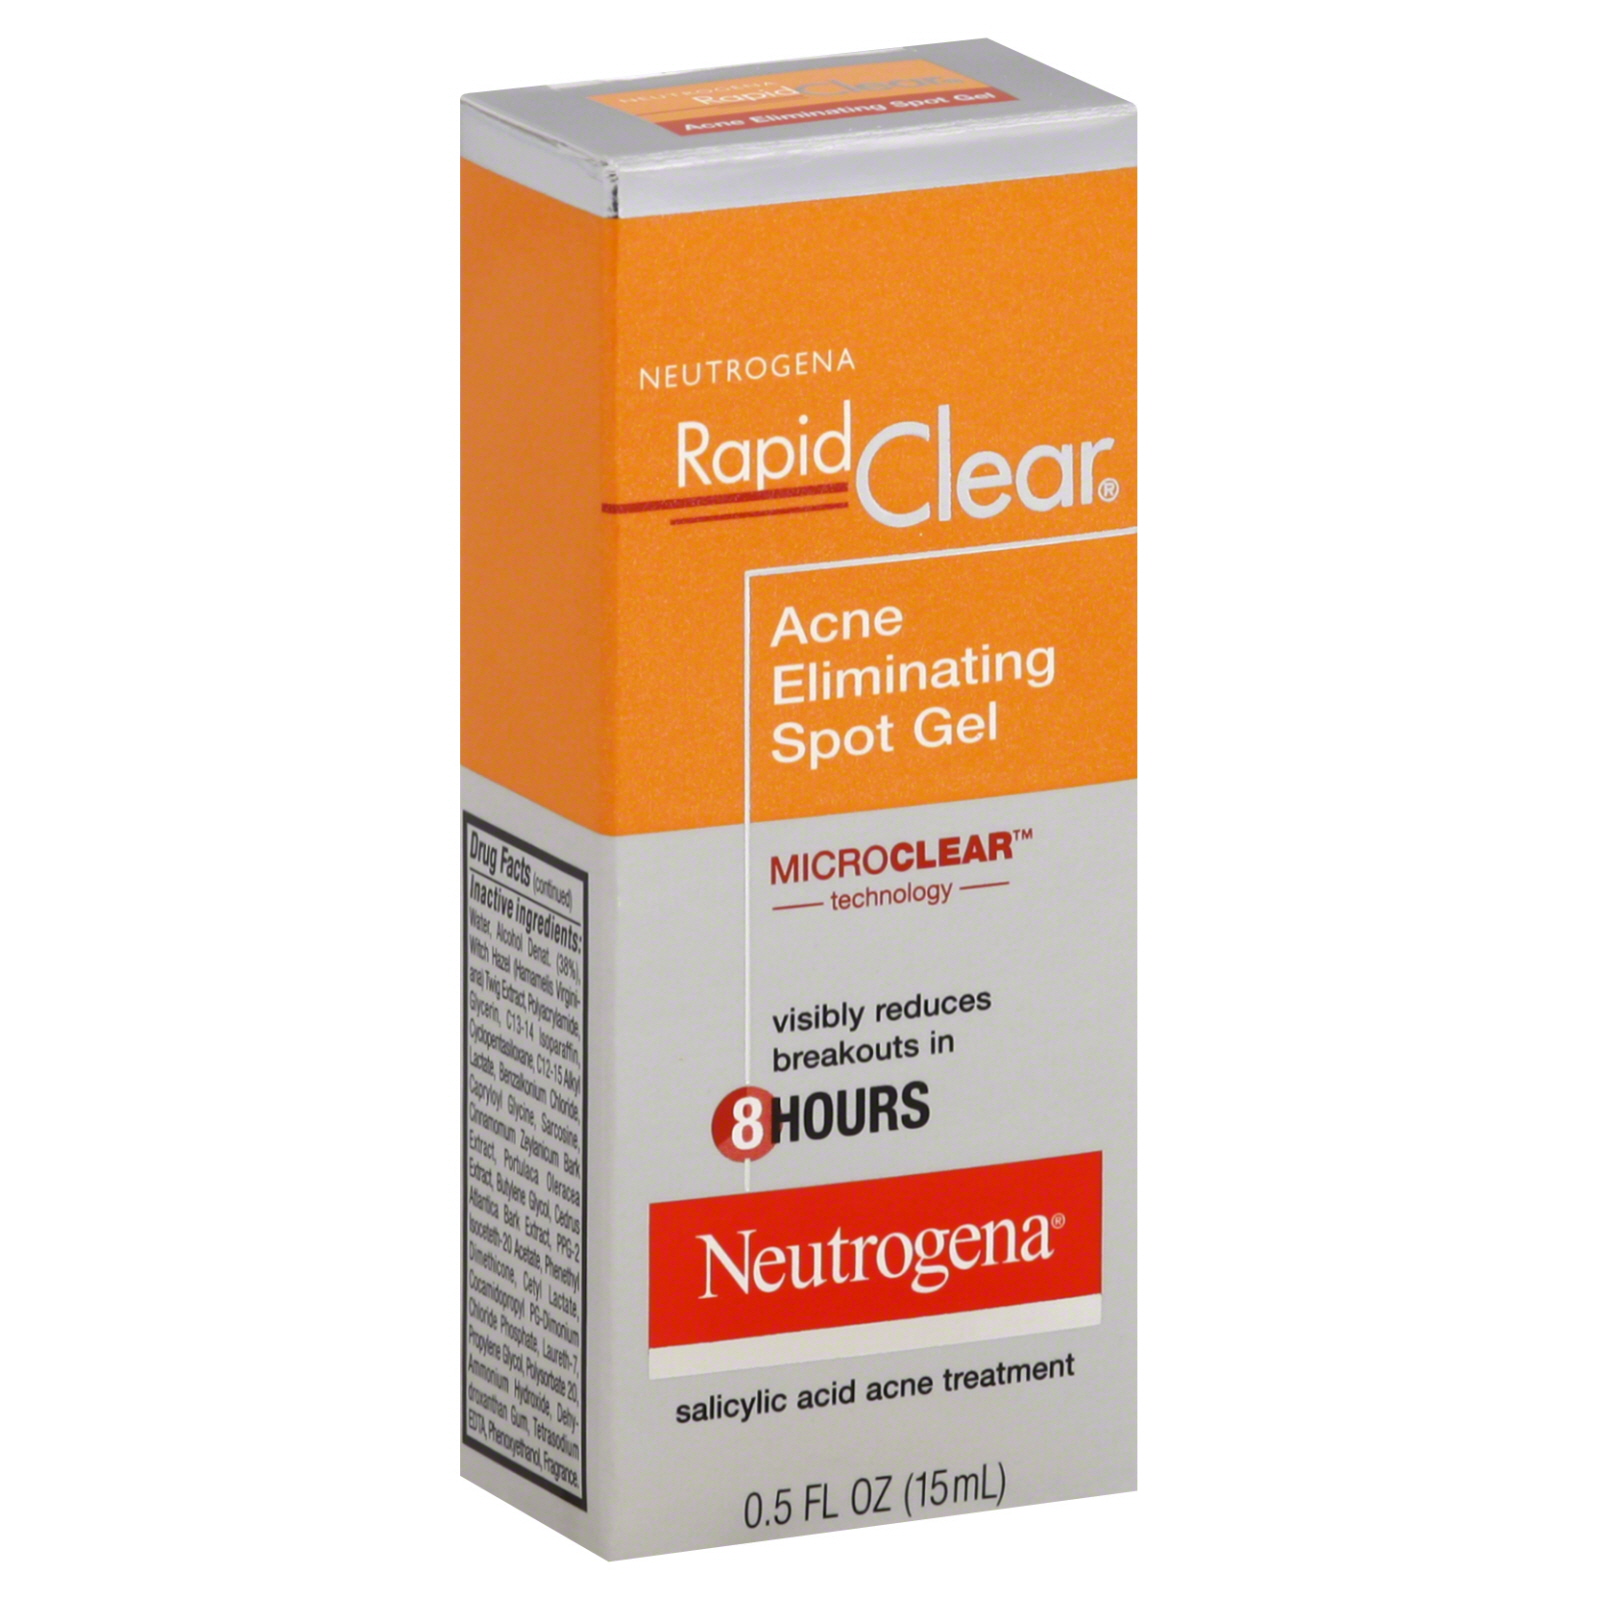 Neutrogena Rapid Clear Acne Eliminating Spot Gel, 0.5 fl oz (15 ml)